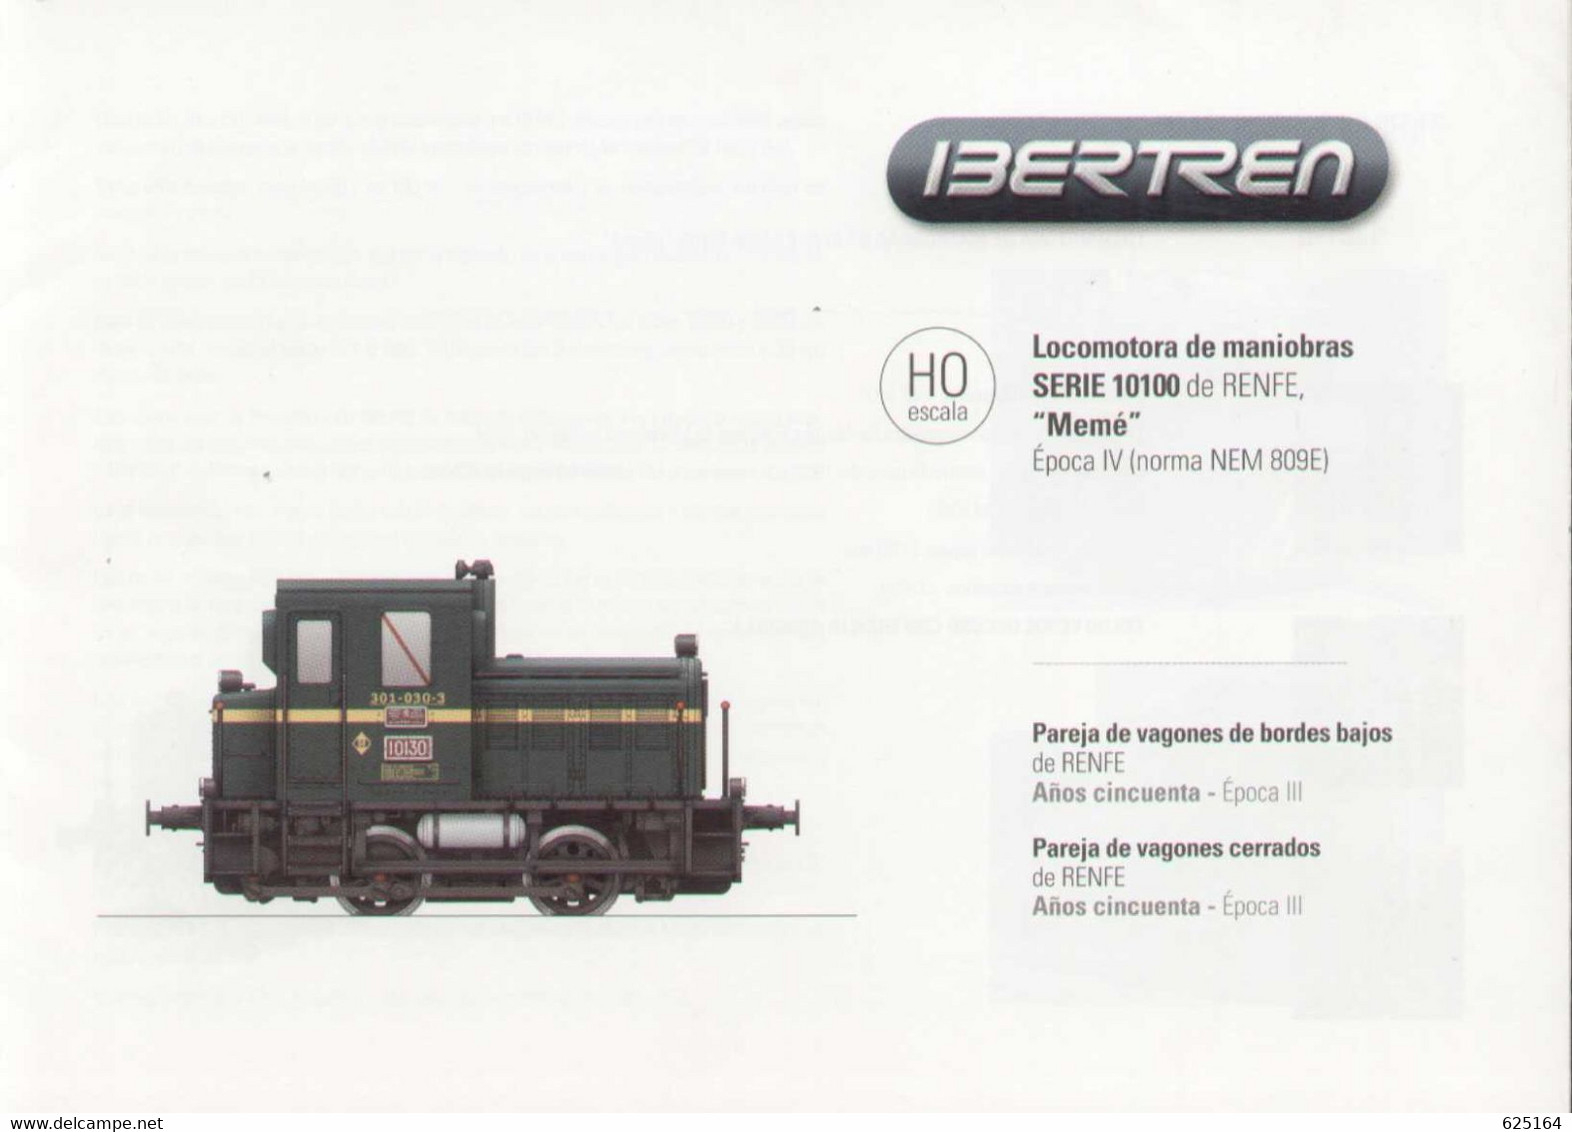 Catalogue IBERTREN 2007 Hoja De Información RENFE 10100 "Memé" HO -en Suédois - Sin Clasificación